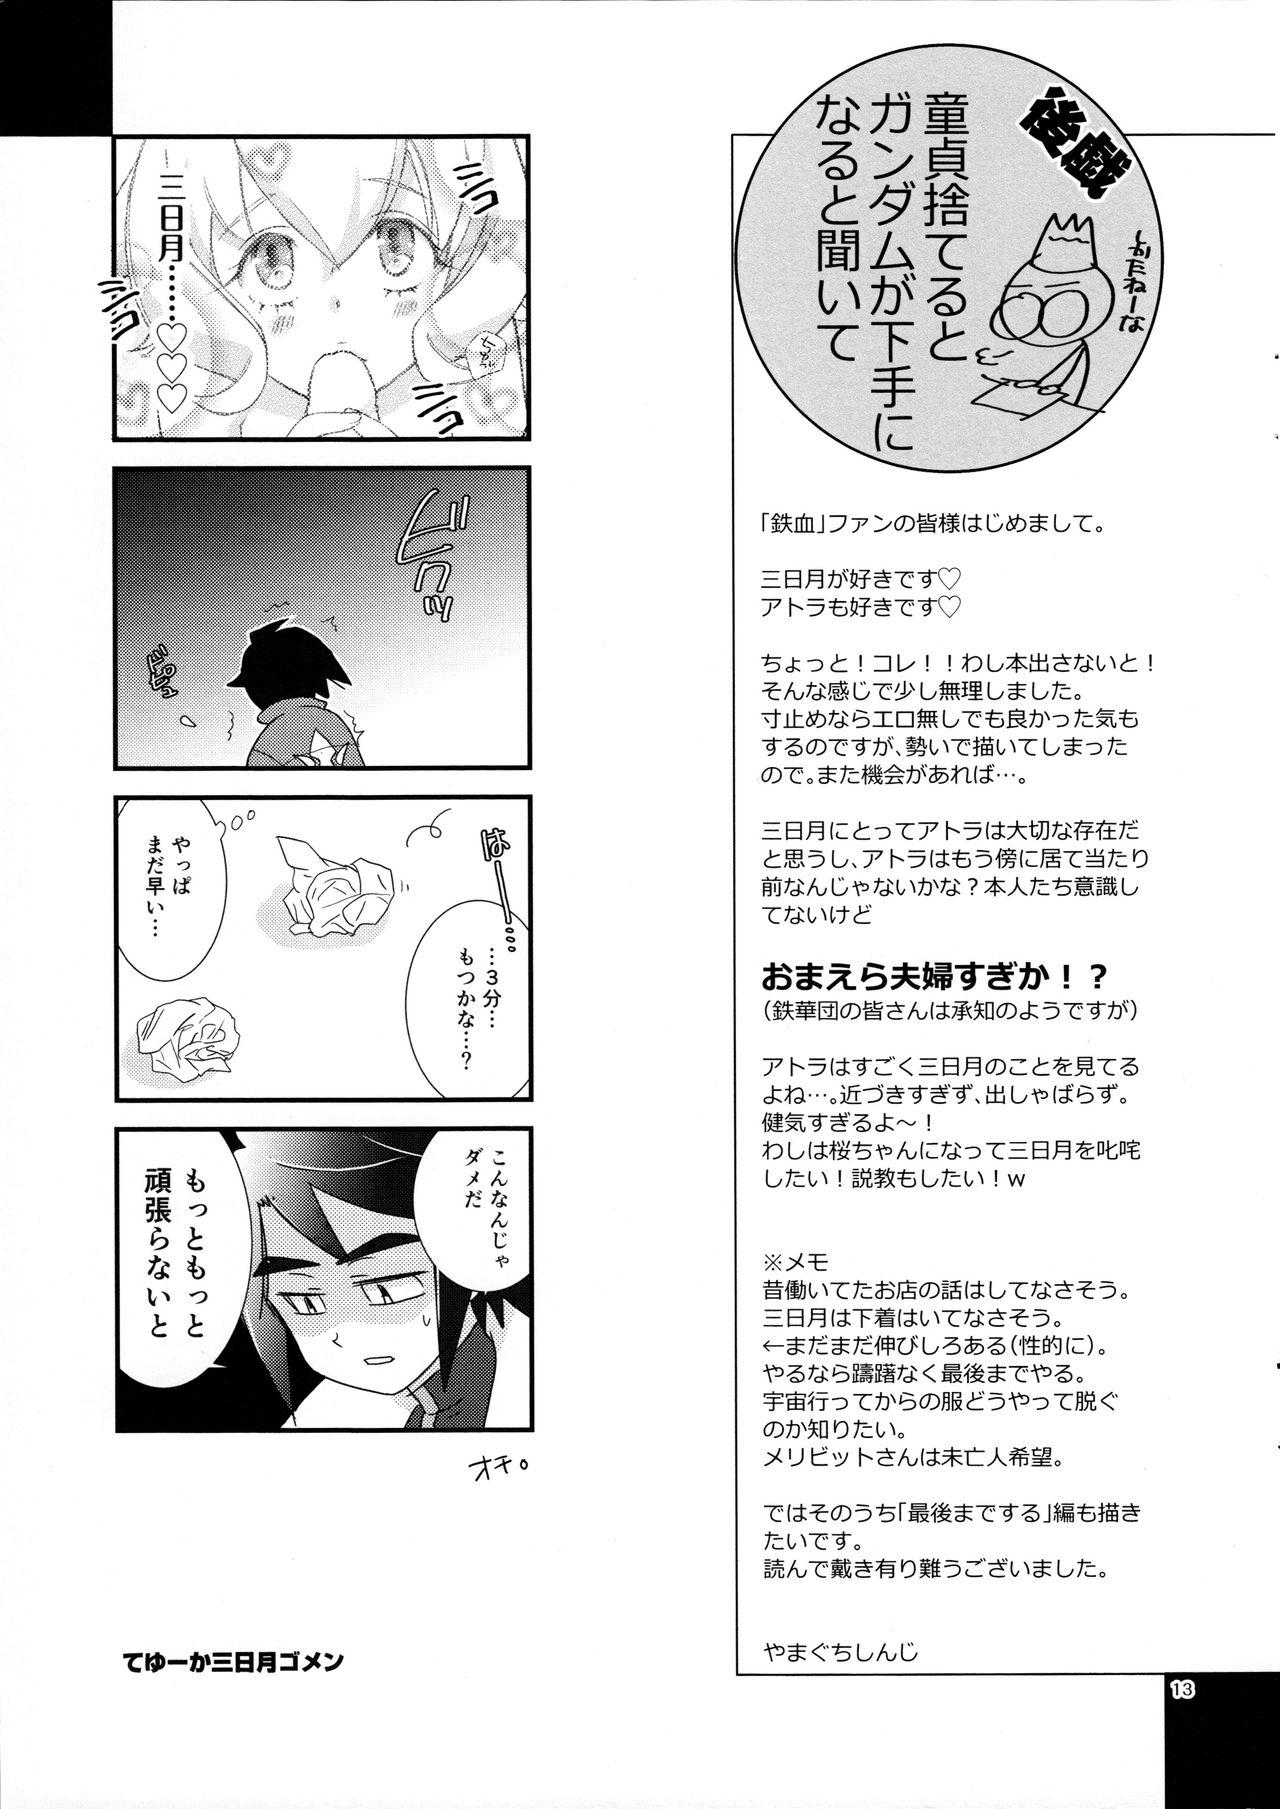 Toilet Mikazuki wa Itsumo Saigomade Shinai - Mobile suit gundam tekketsu no orphans Spooning - Page 12